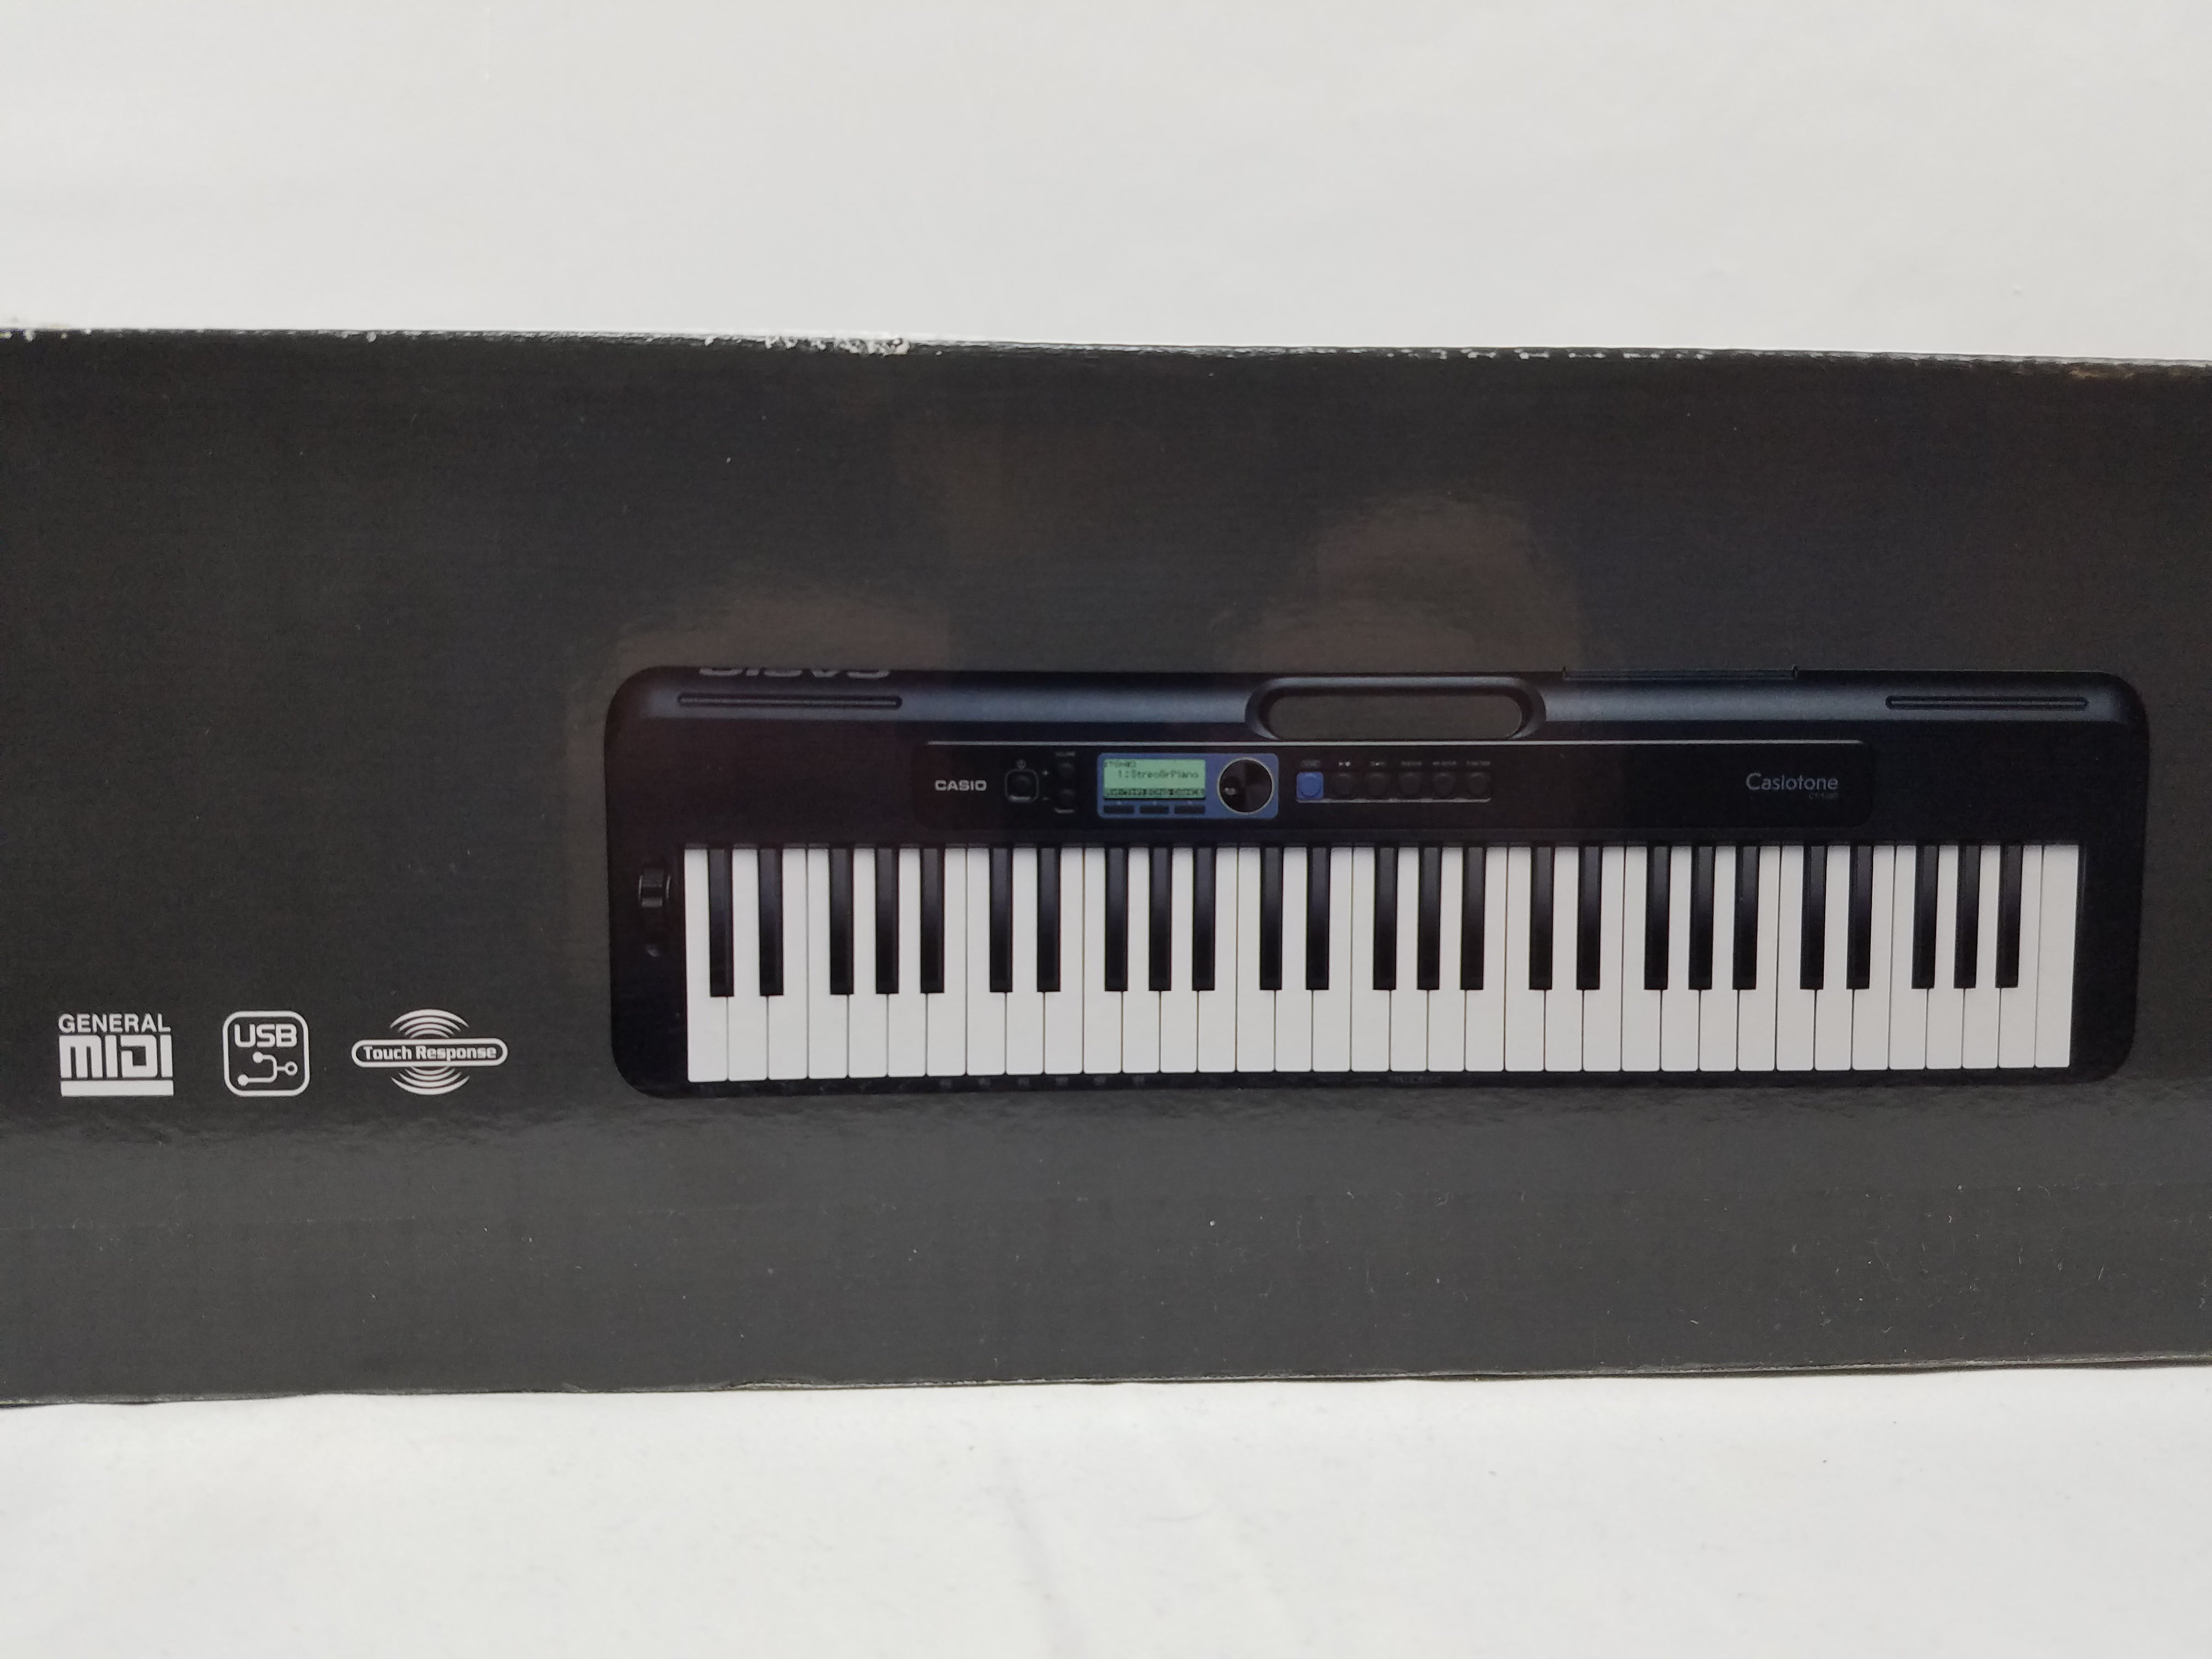 Casio CT-S300 Casiotone Portable Keyboard